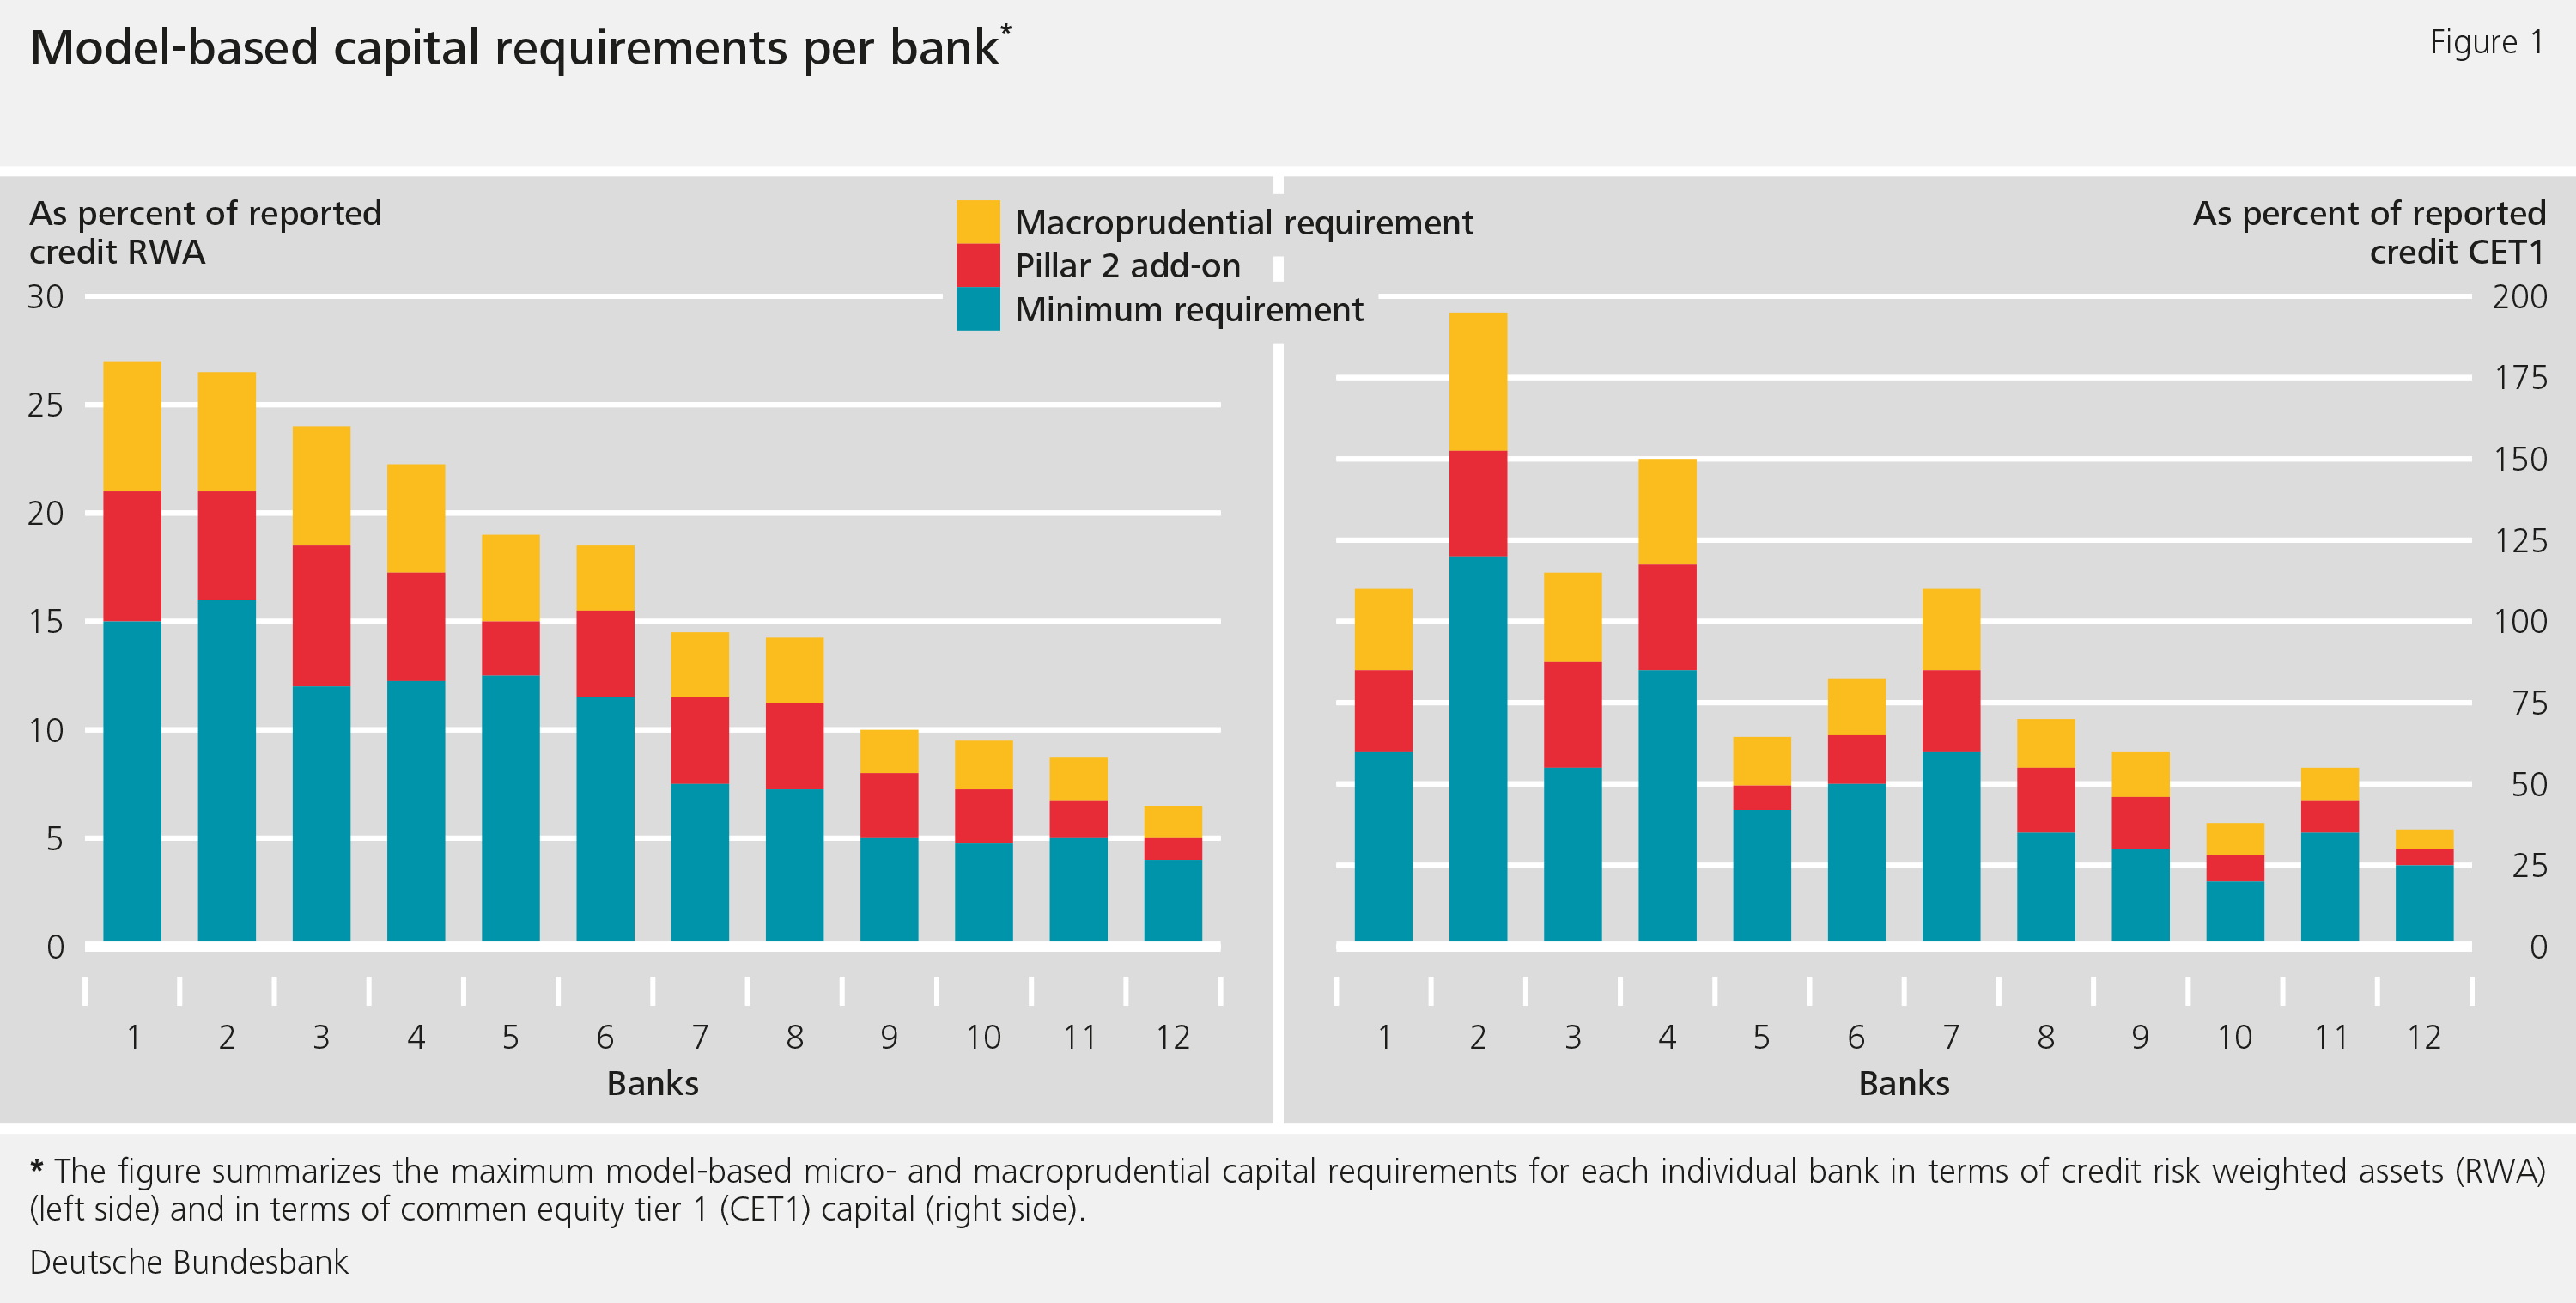 Figure 1: Model-based capital requirements per bank